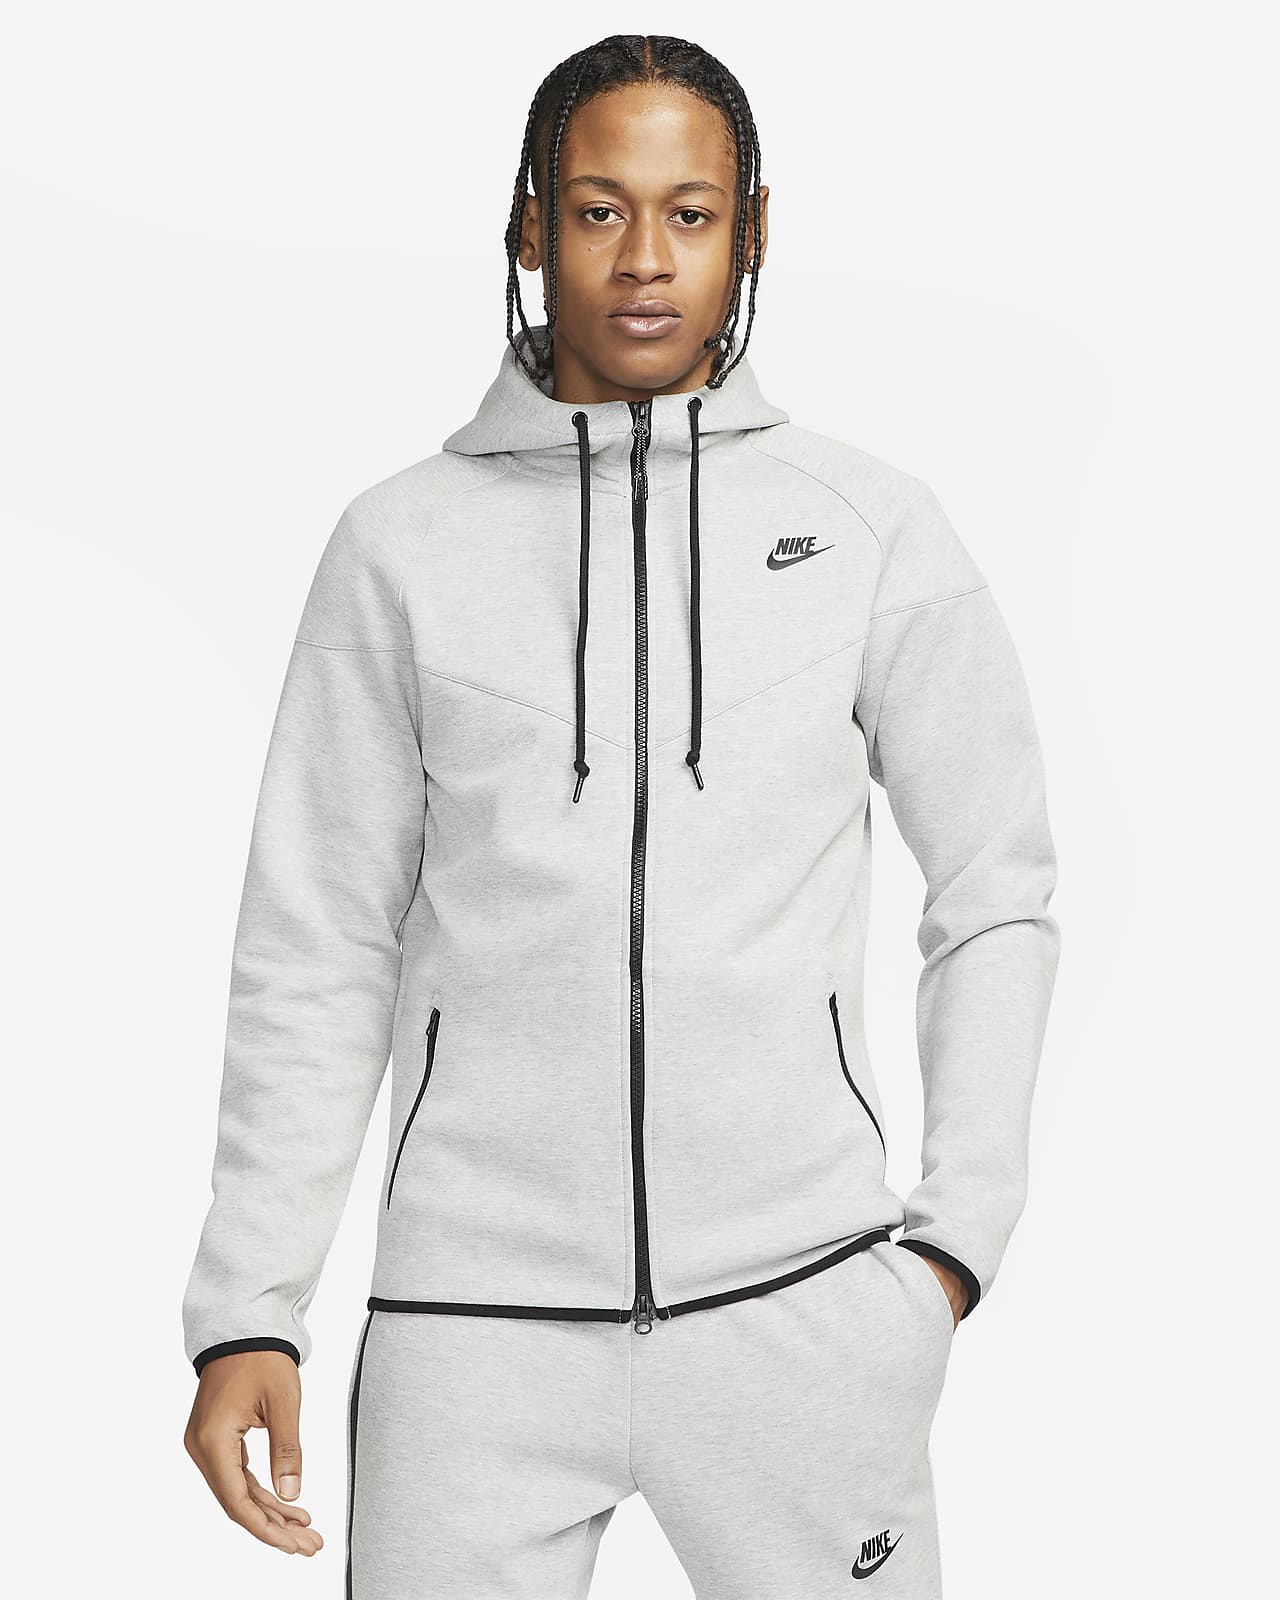 Stadium niet voldoende verontschuldiging Nike Sportswear Tech Fleece OG hoodie met rits voor heren. Nike BE